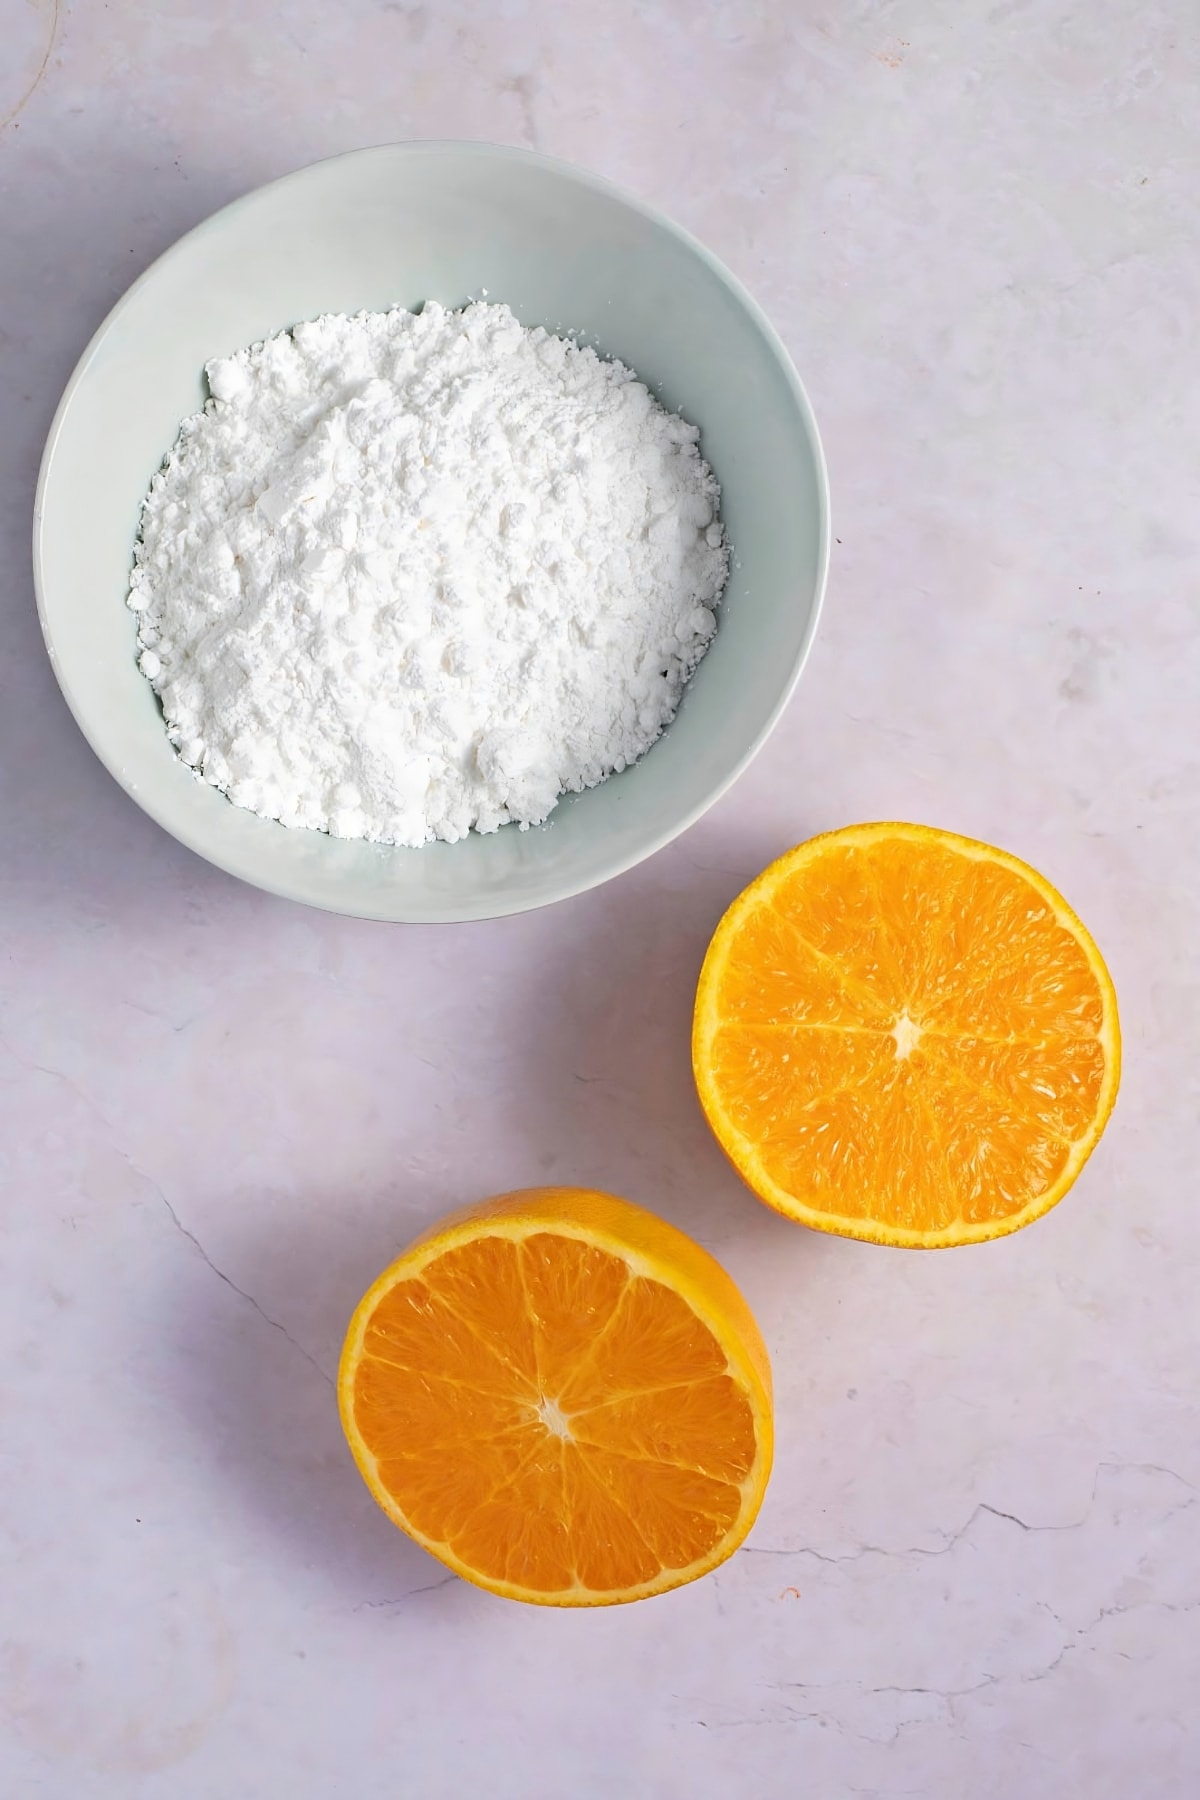 Orange Glaze Icing Ingredients - Confectioner's Sugar and Oranges
